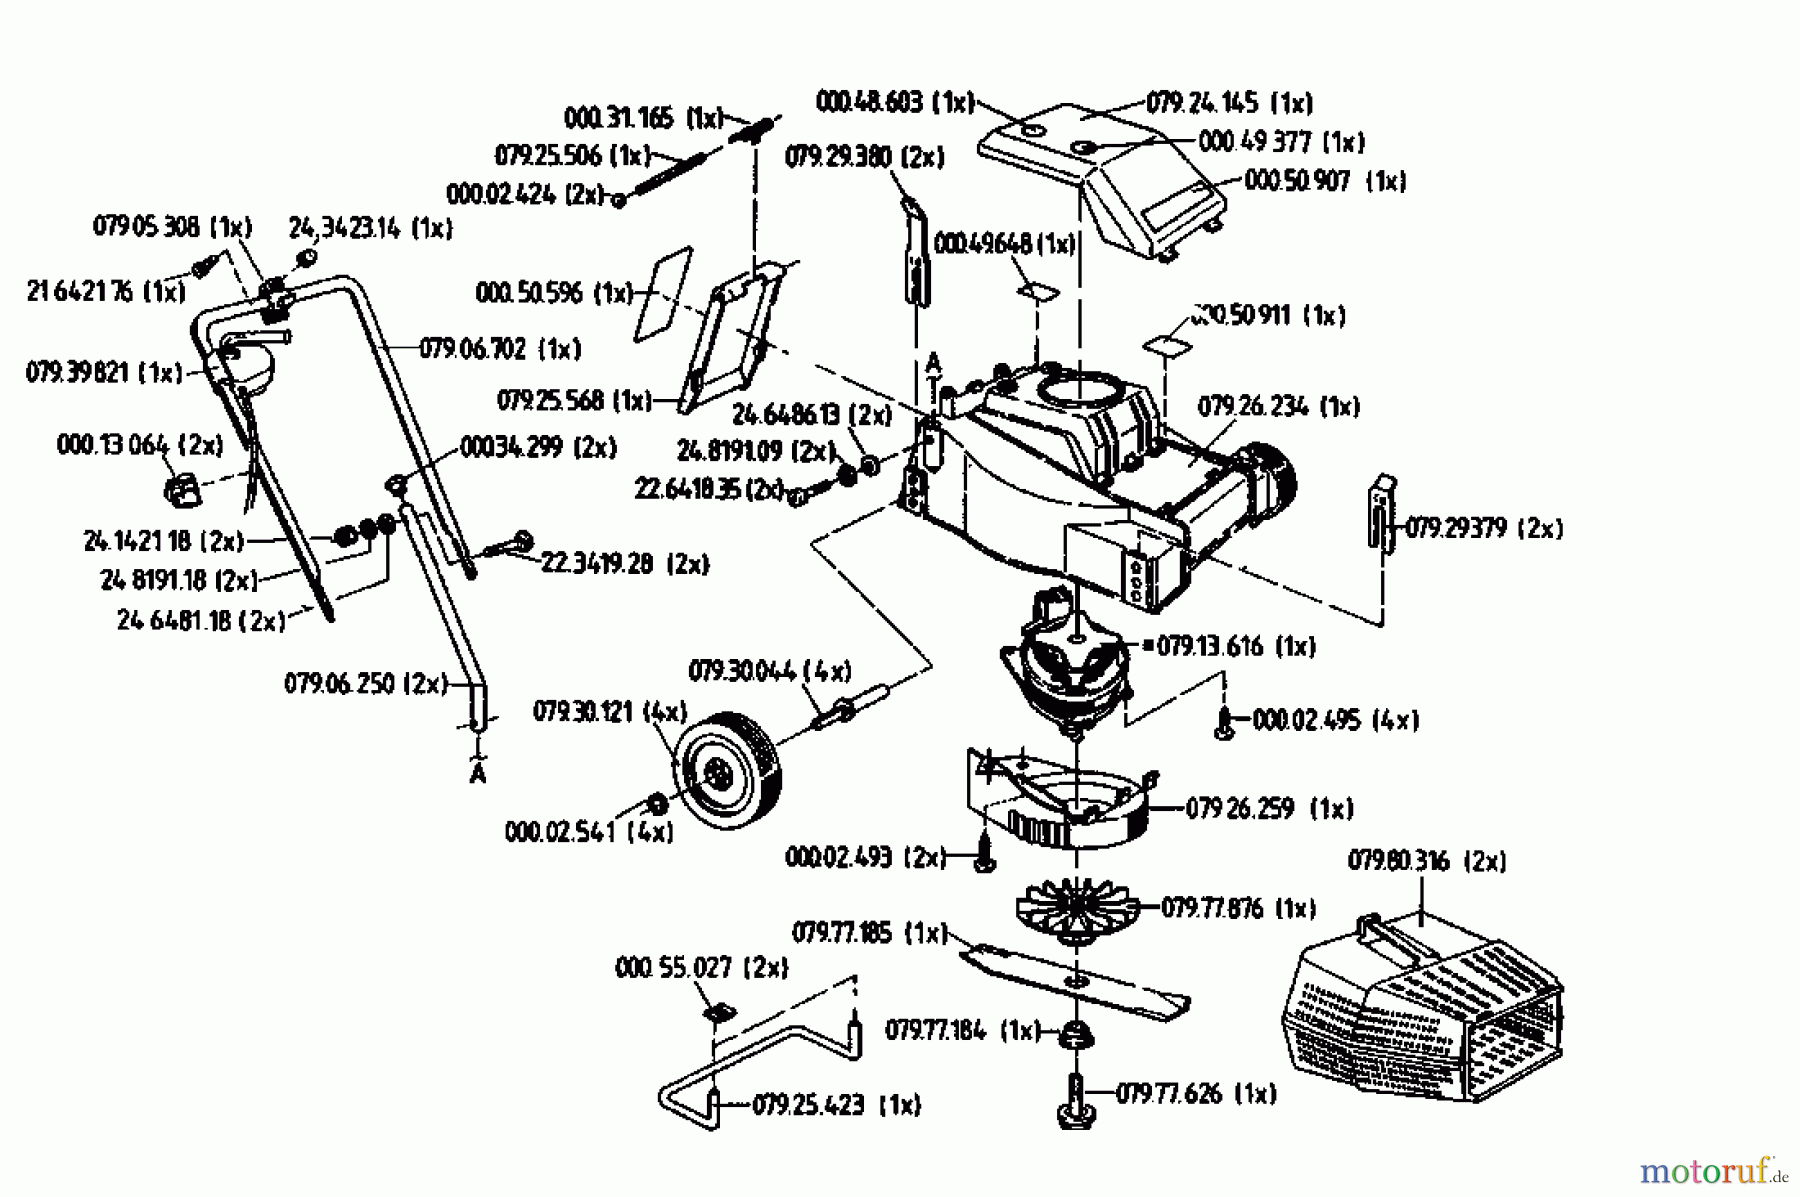  Gutbrod Electric mower Darling 02810.07  (1993) Basic machine